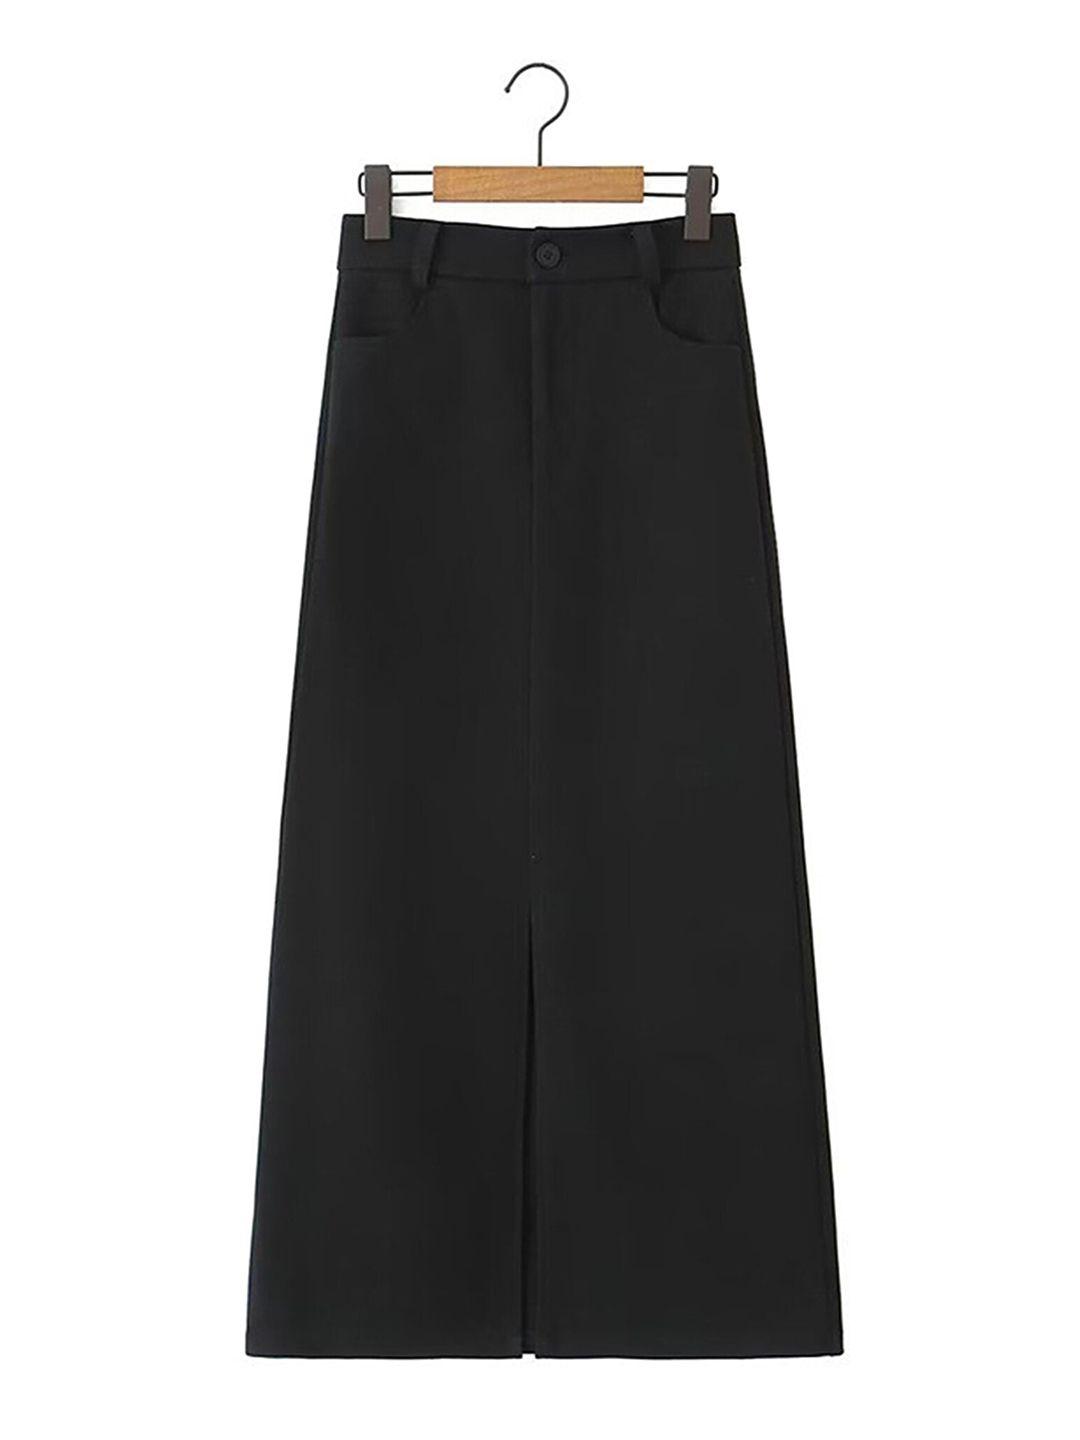 lulu & sky a-line front slit maxi length skirt